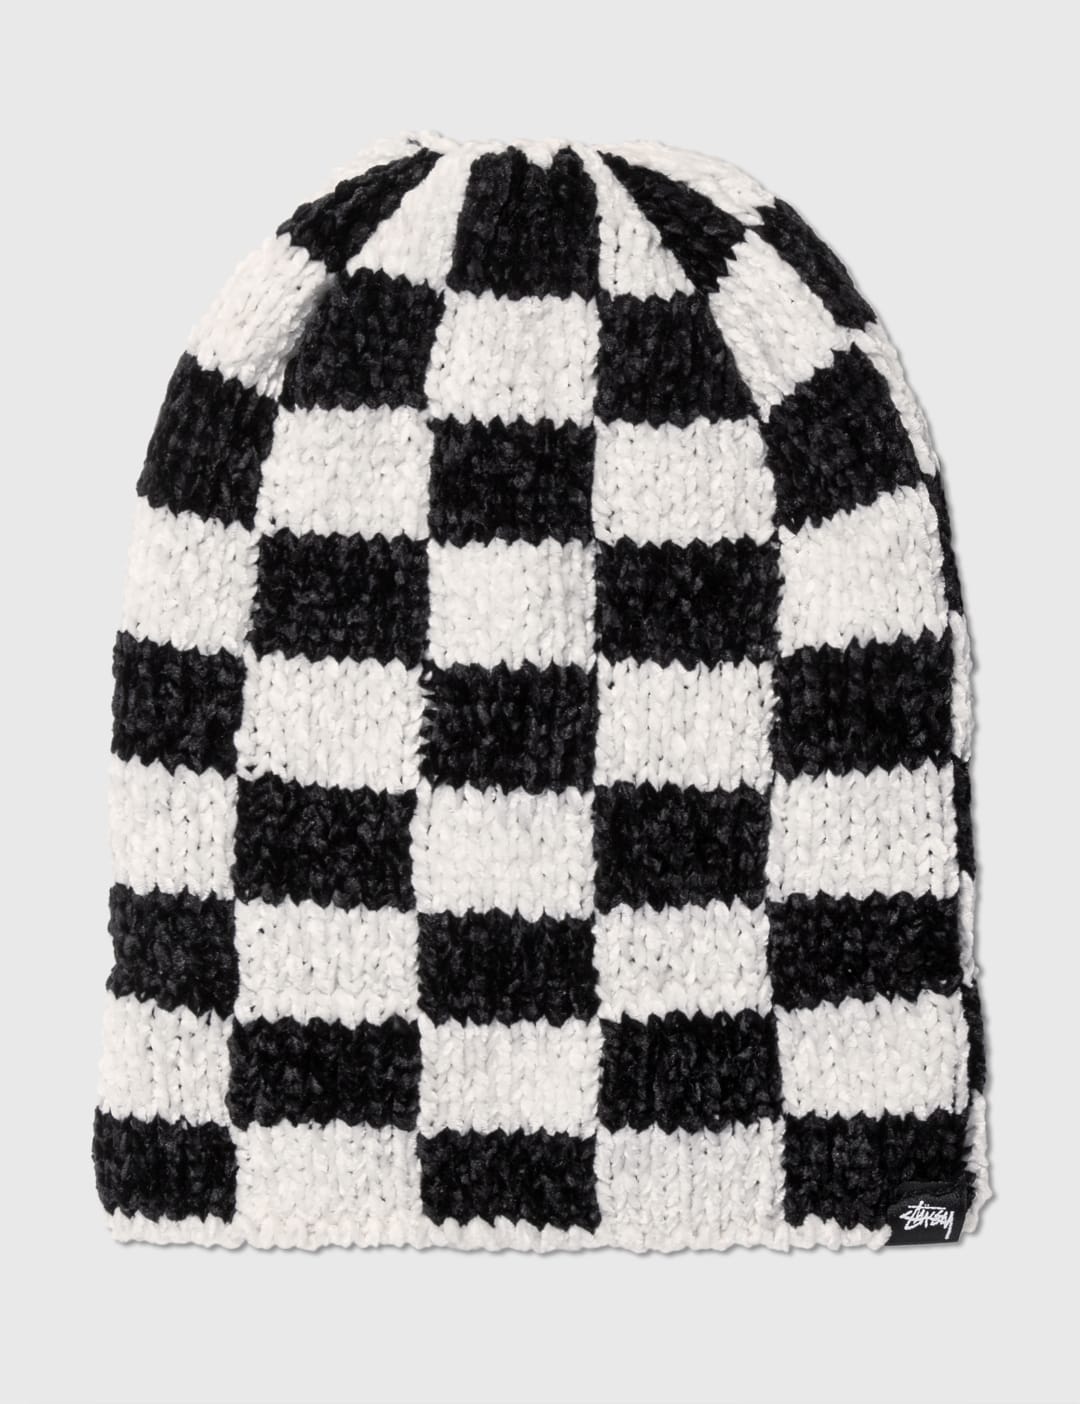 Stüssy - Crochet Checkered Beanie | HBX - HYPEBEAST 为您搜罗全球